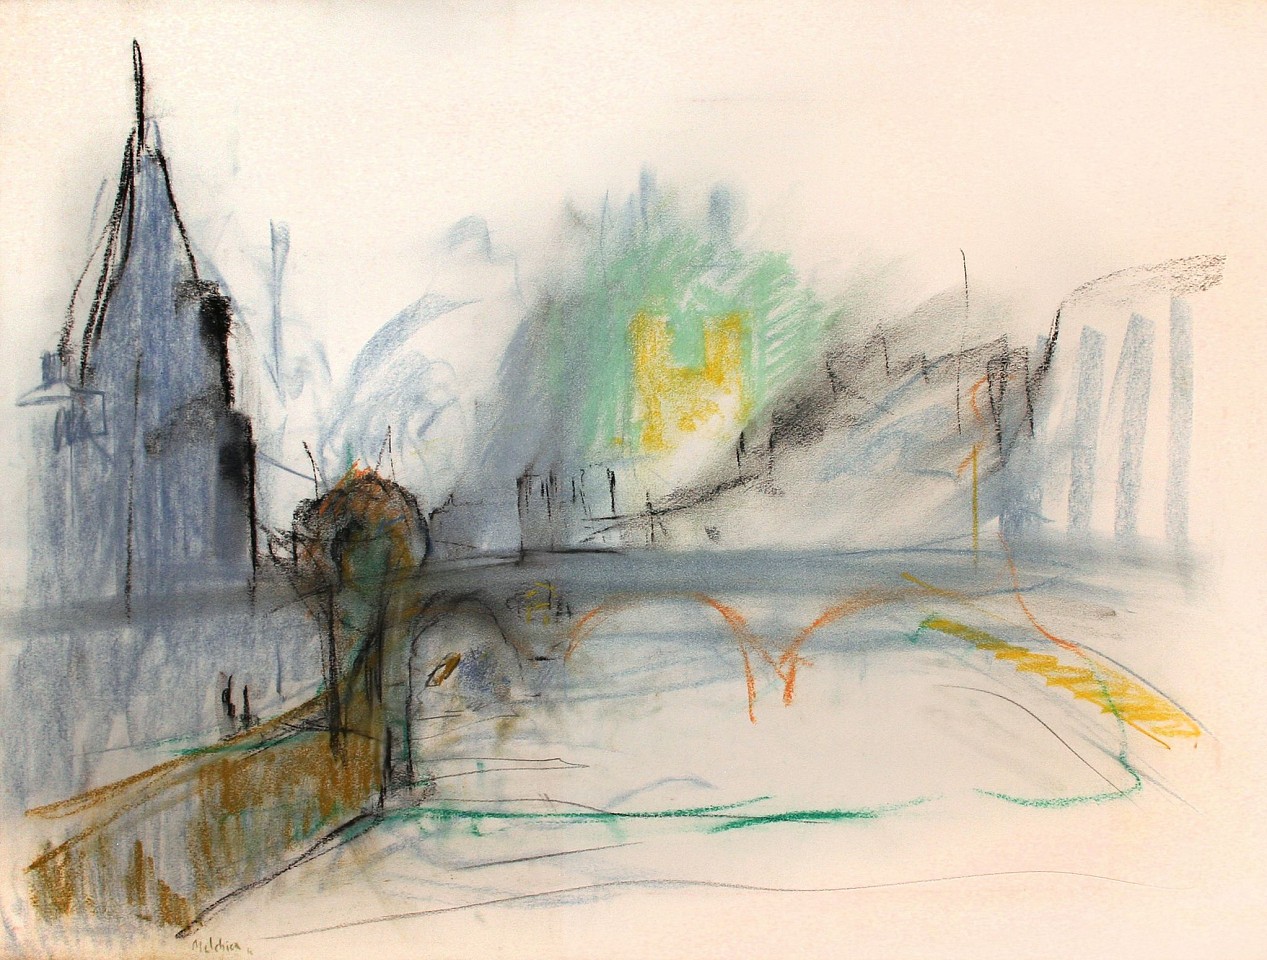 Isabelle Melchior, Paris, 2011
pastel on paper, 22" x 30"
IM 1226
Price Upon Request